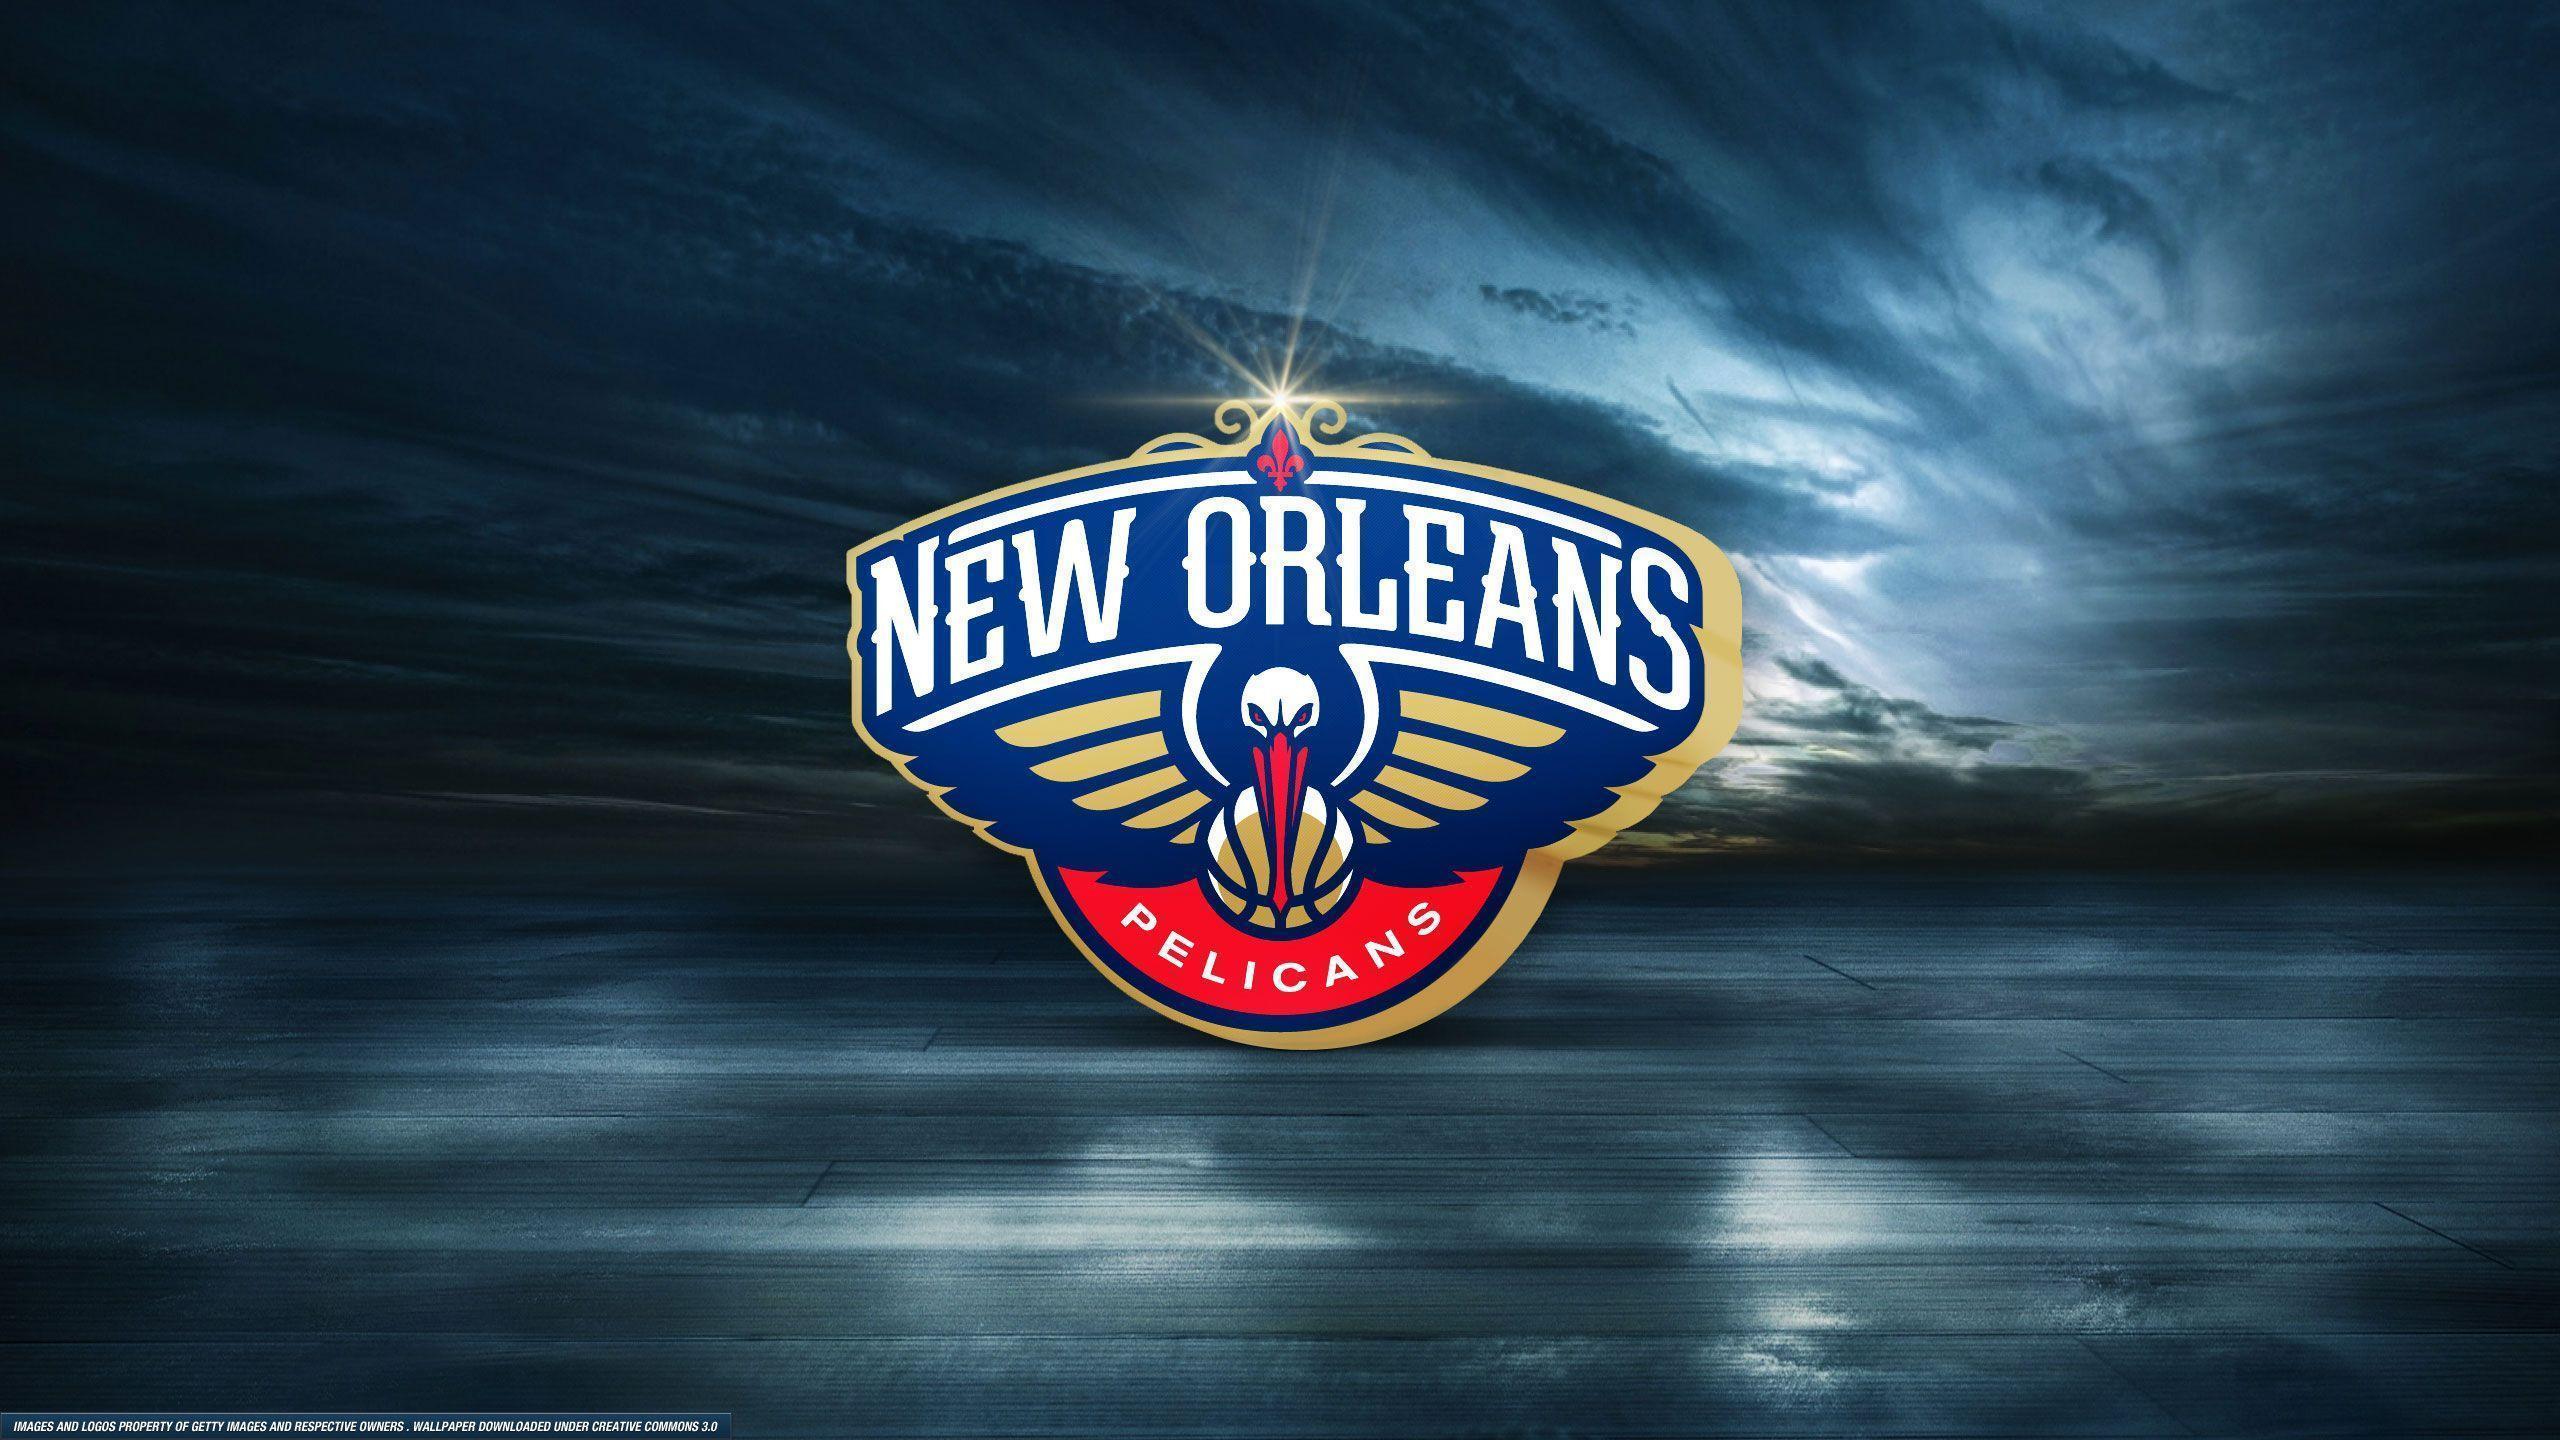 New Orleans Pelicans Wallpaper. Basketball Wallpaper at